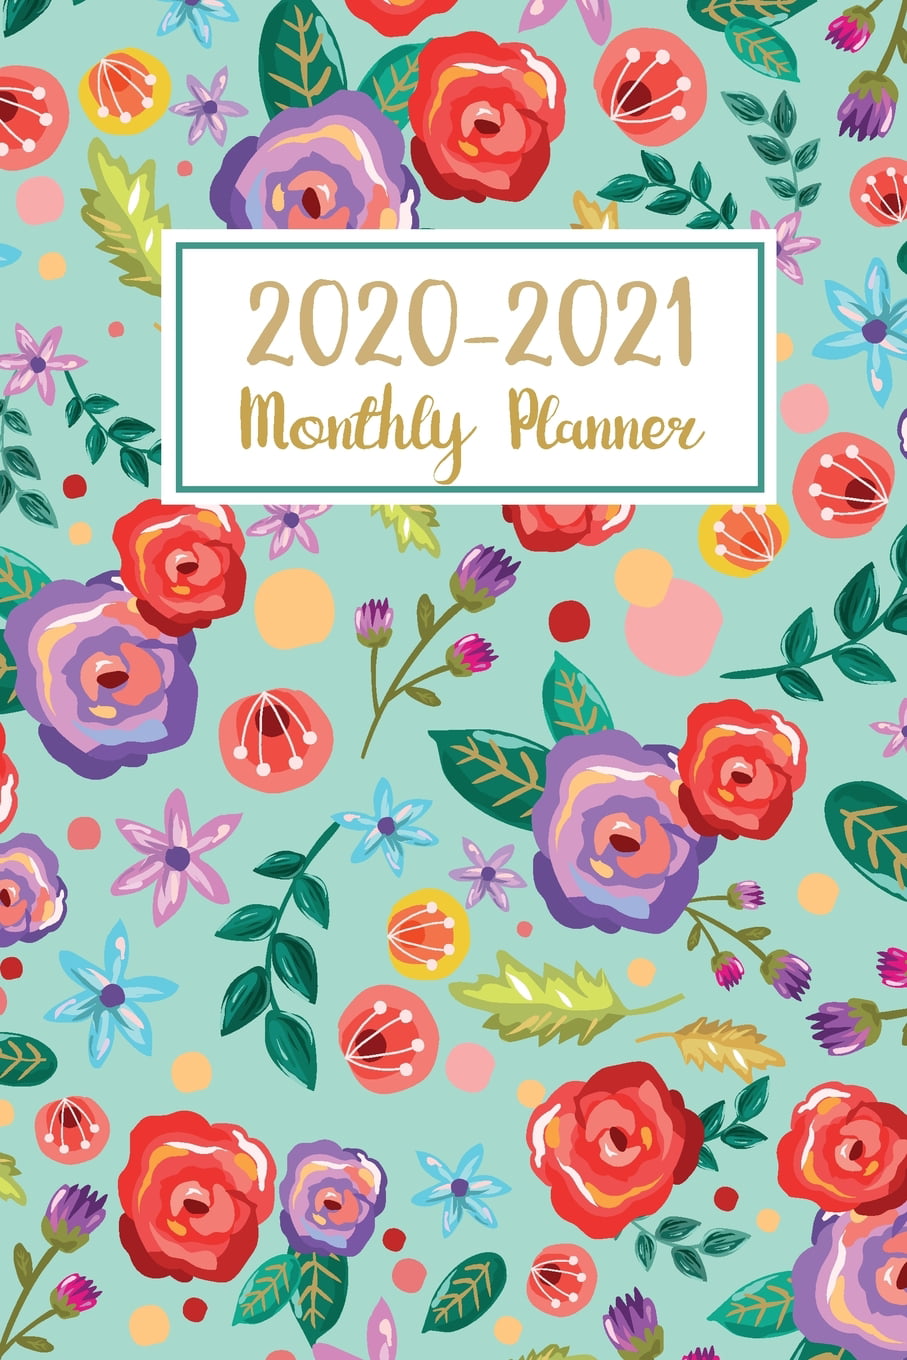 Plan Ahead 2 Year Calendar 2020-2021 Monthly Planner: 2020 ...